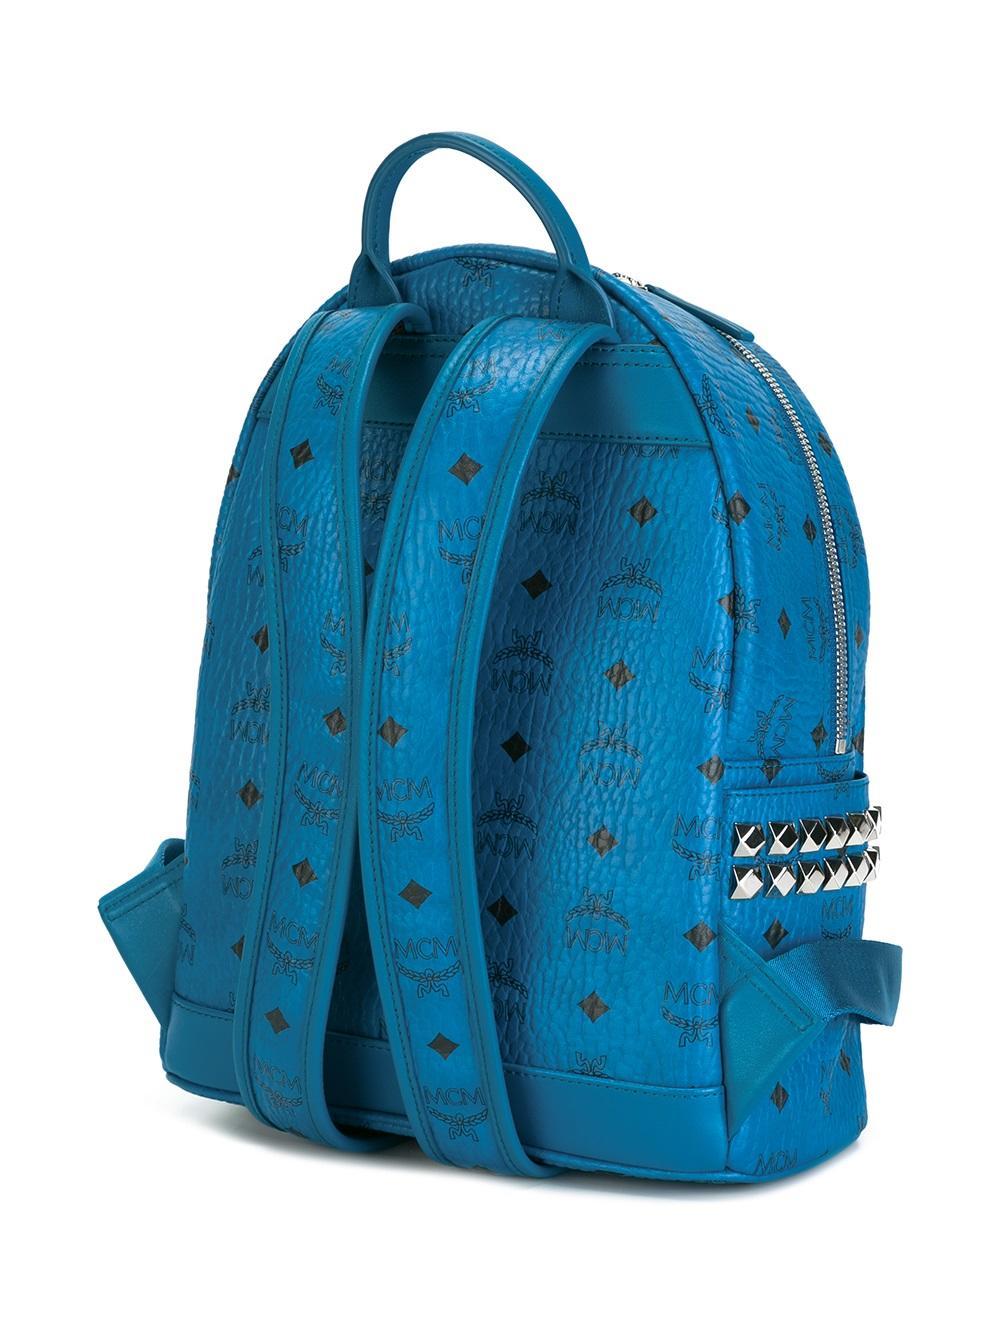 MCM &#39;stark&#39; Small Backpack in Blue for Men - Lyst